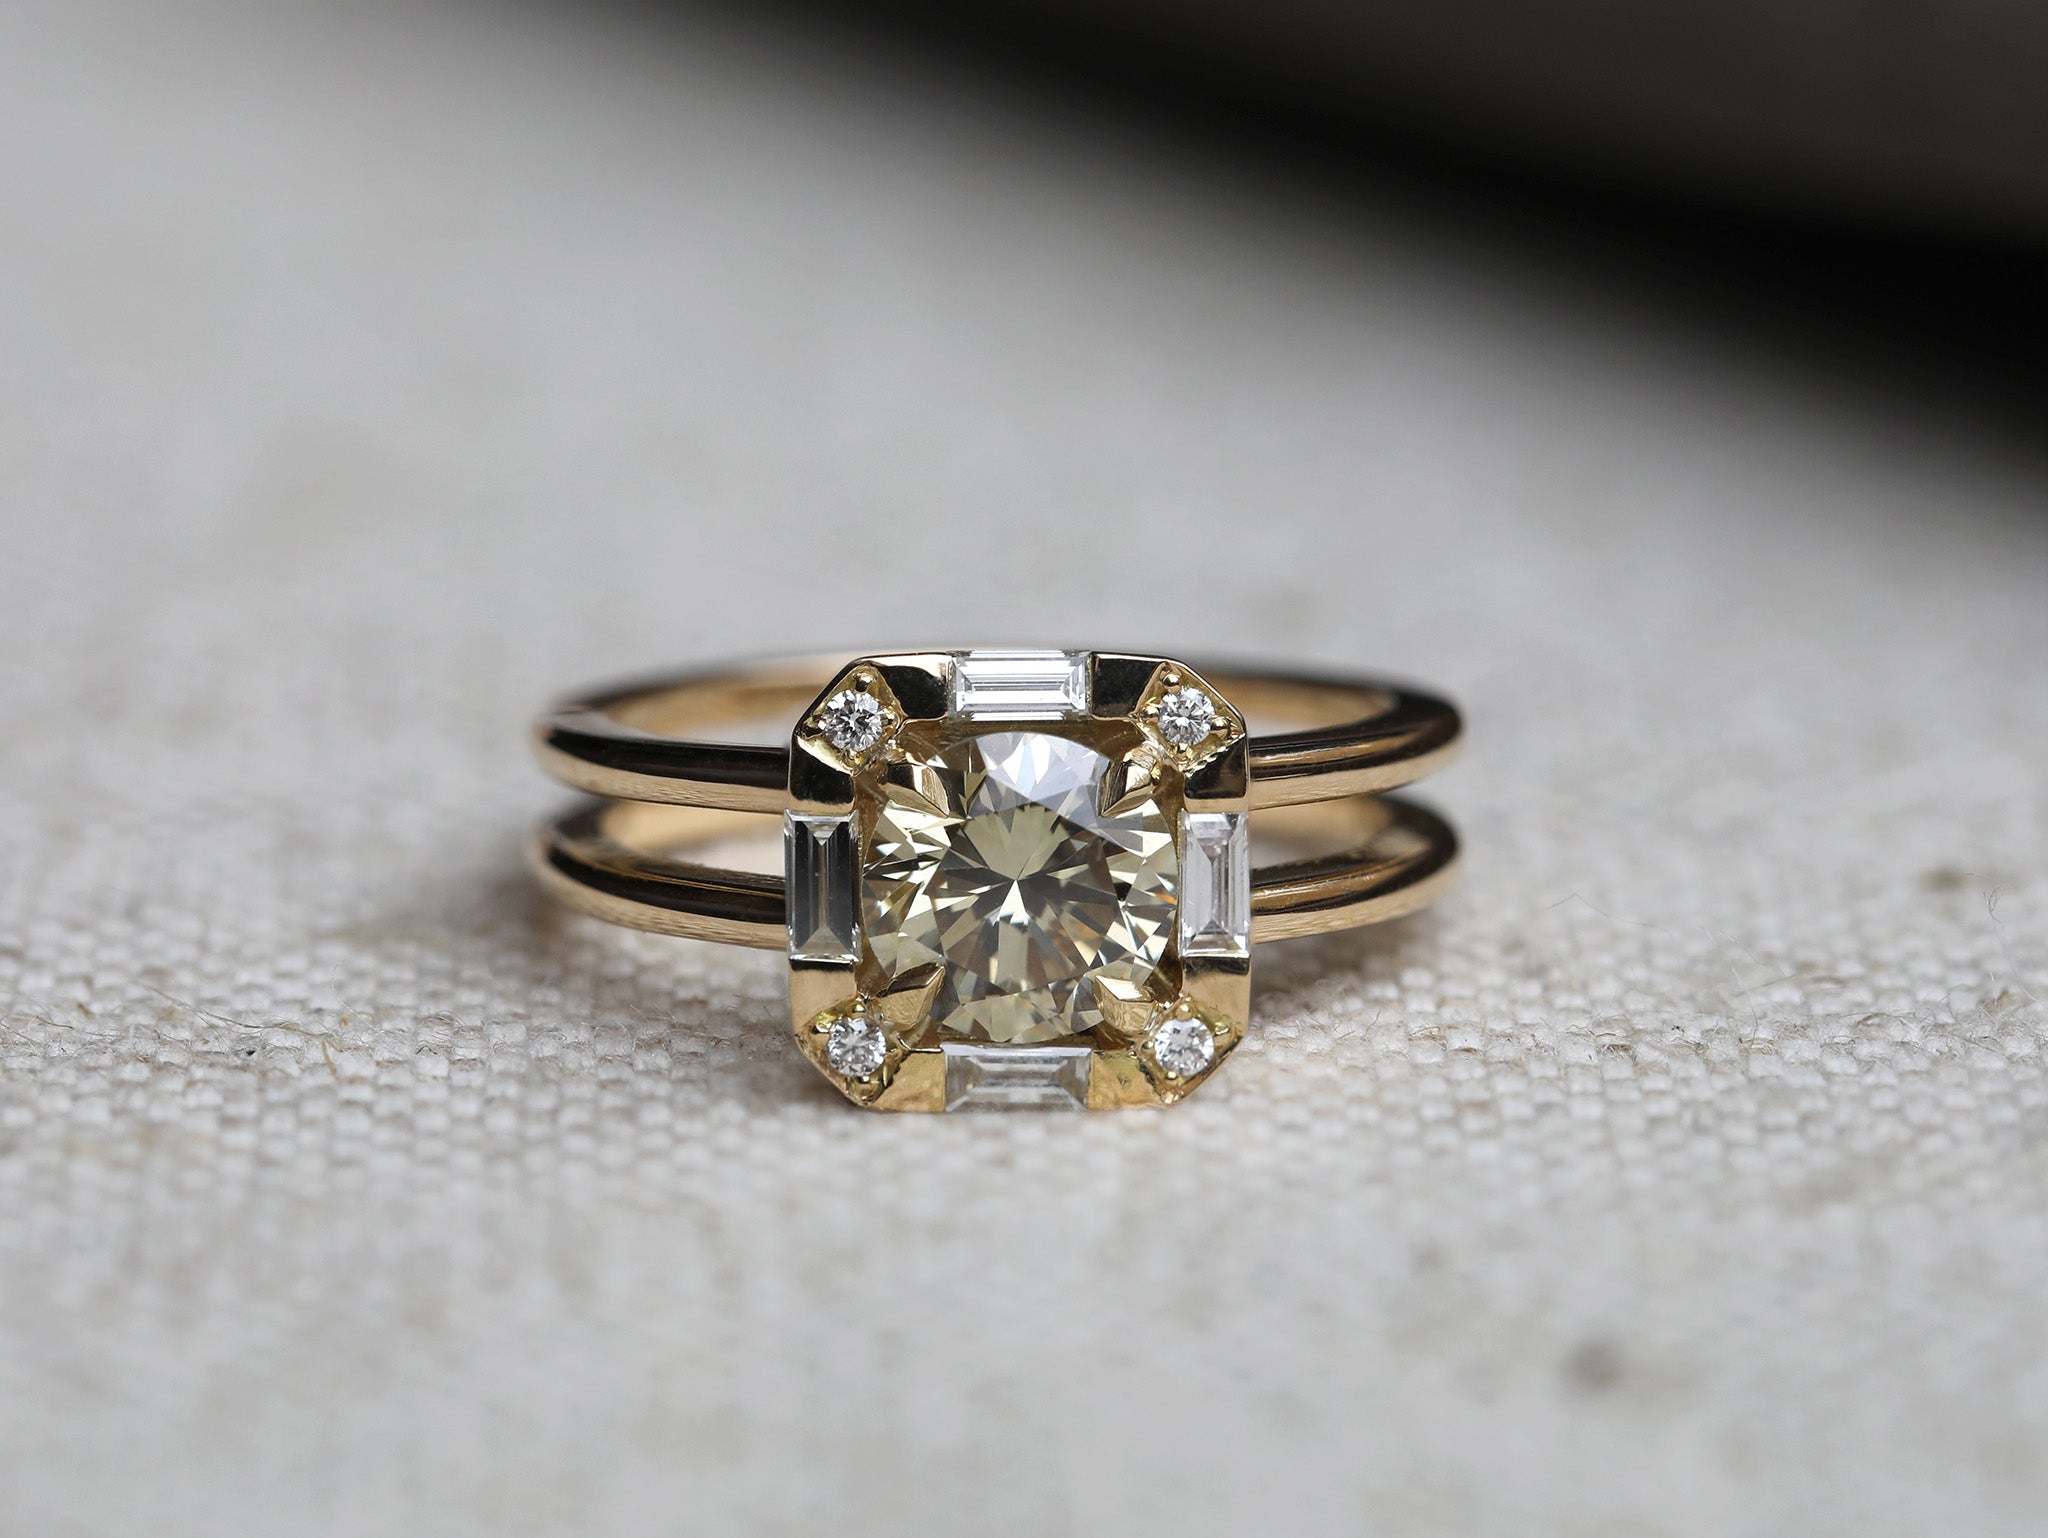 Bespoke champagne diamond engagement ring by Rachel Boston, an east London based jeweller